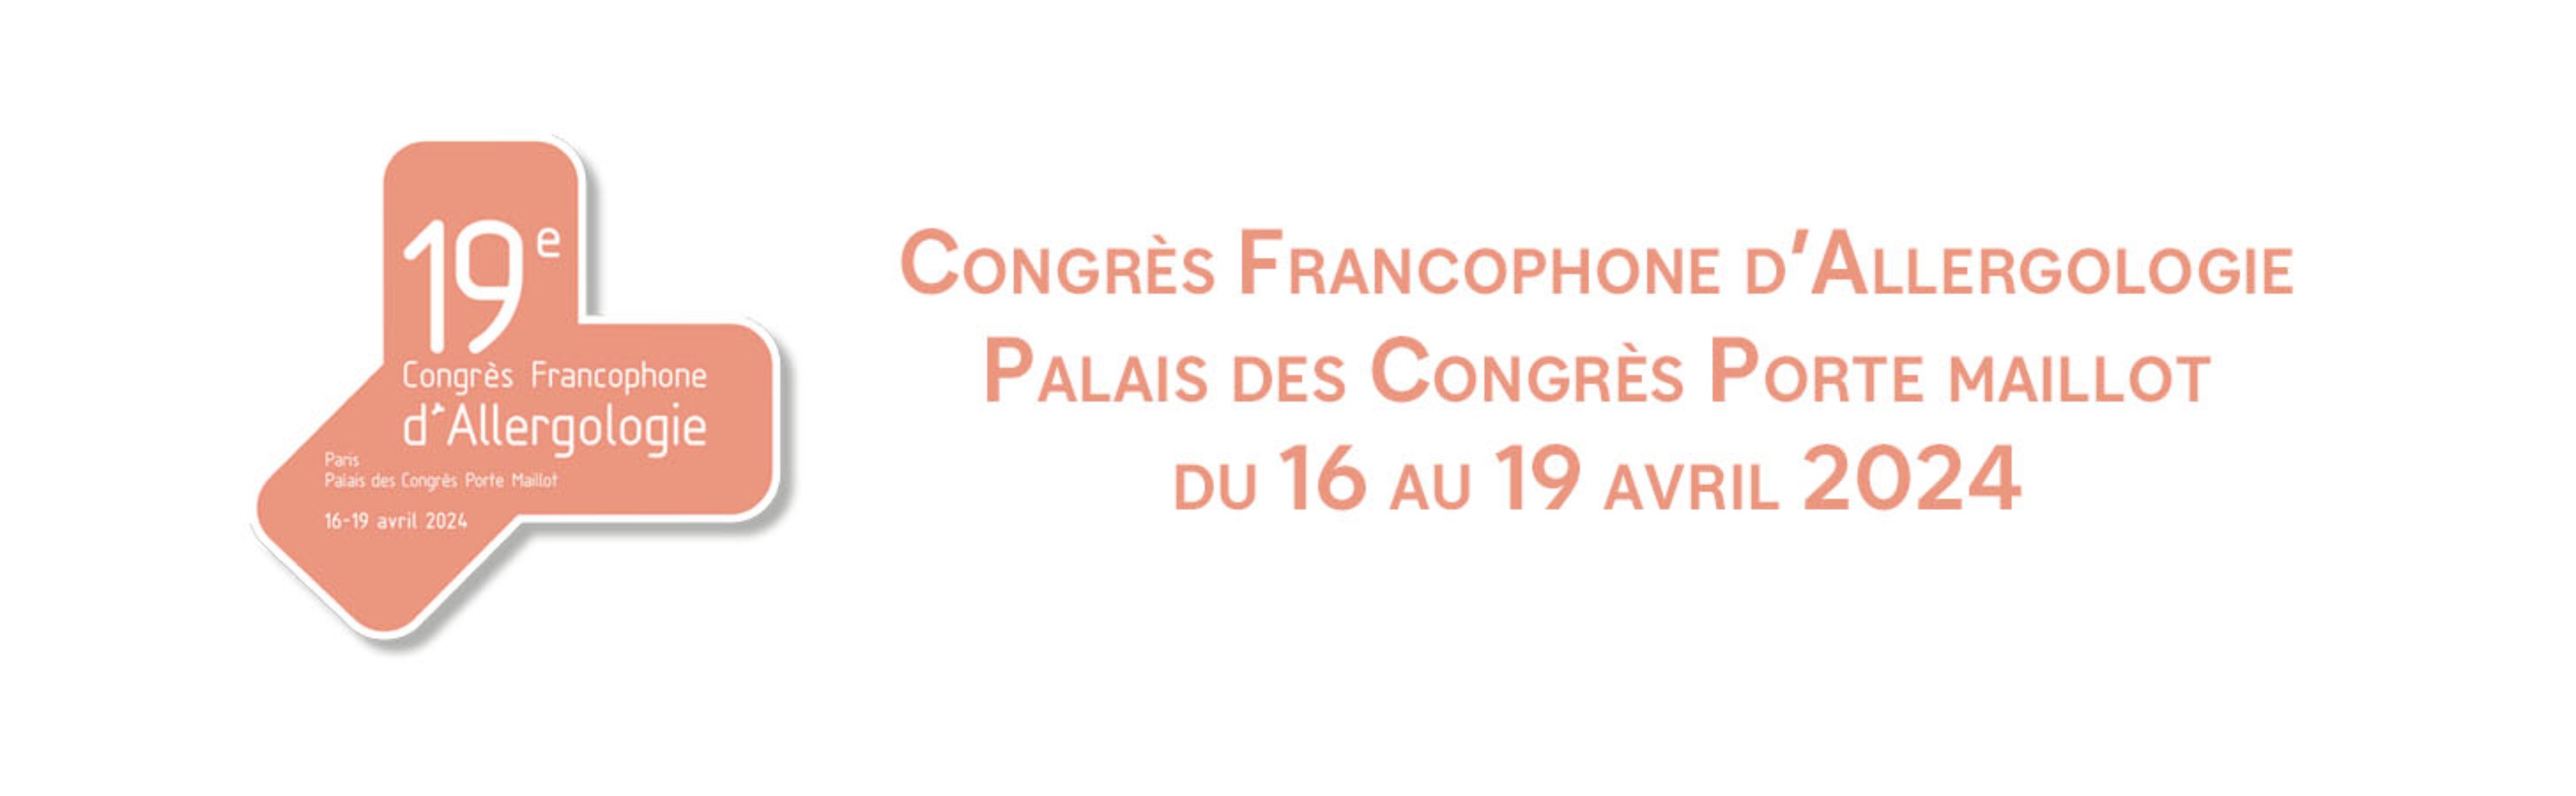 19e-congres-francophone-allergologie-2024-hero